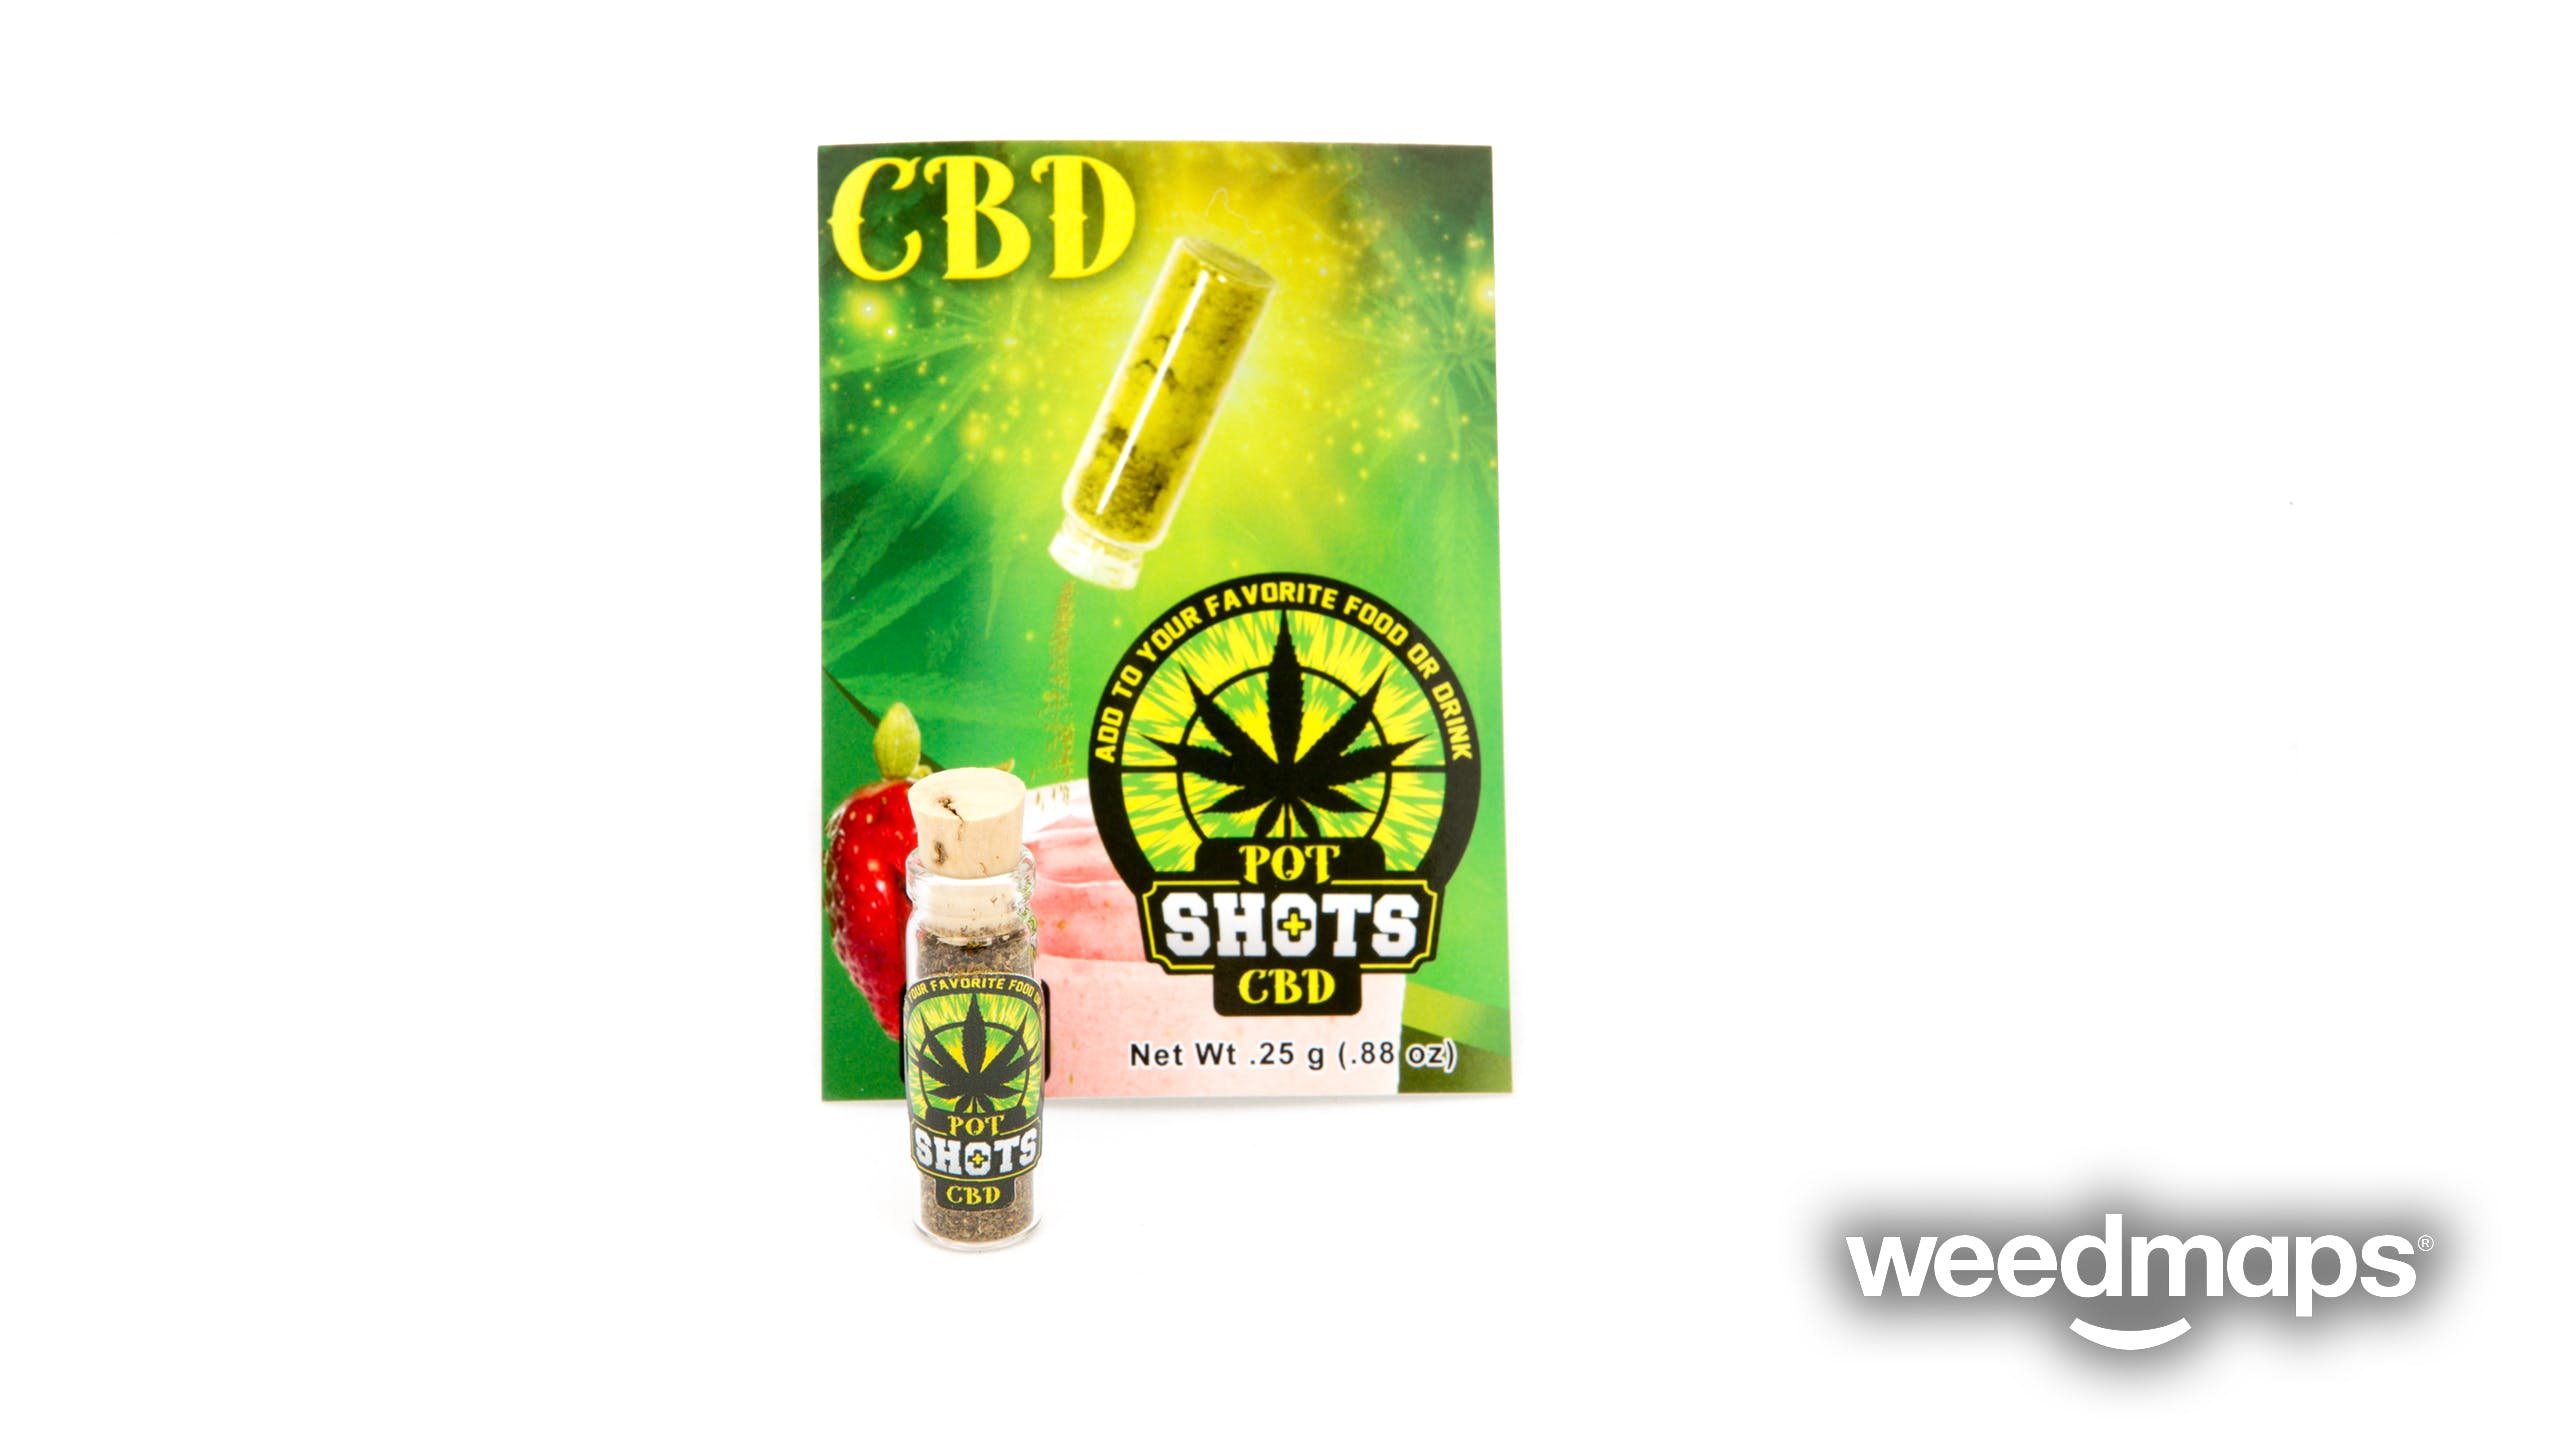 marijuana-dispensaries-top-shelf-wellness-center-in-phoenix-pot-shots-cbd